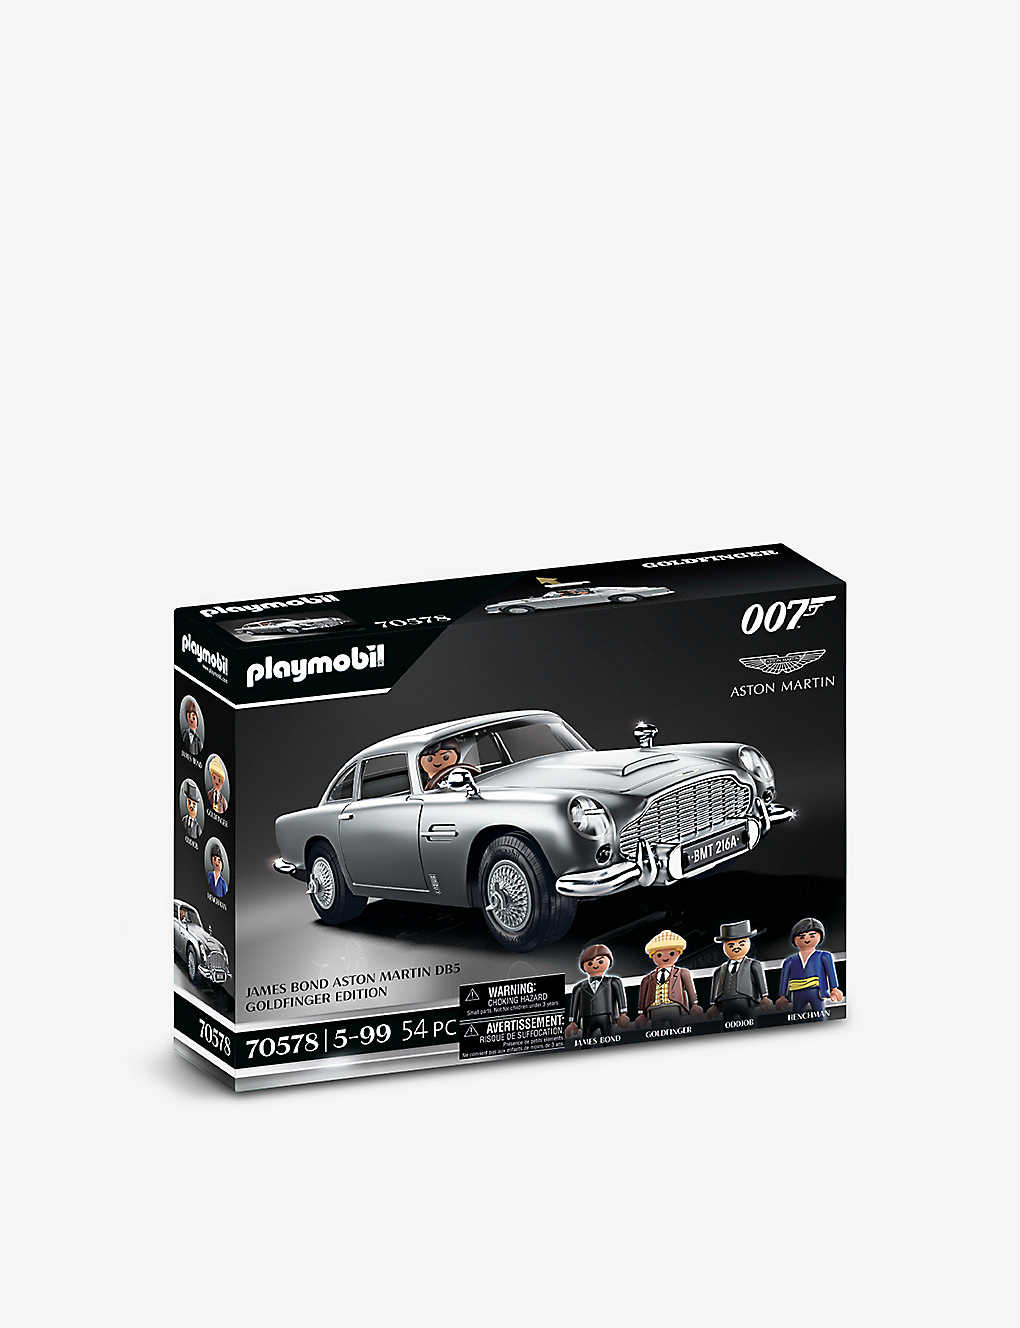 selfridges.com | PLAYMOBIL James Bond Aston Martin DB5 Goldfinger Edition play set